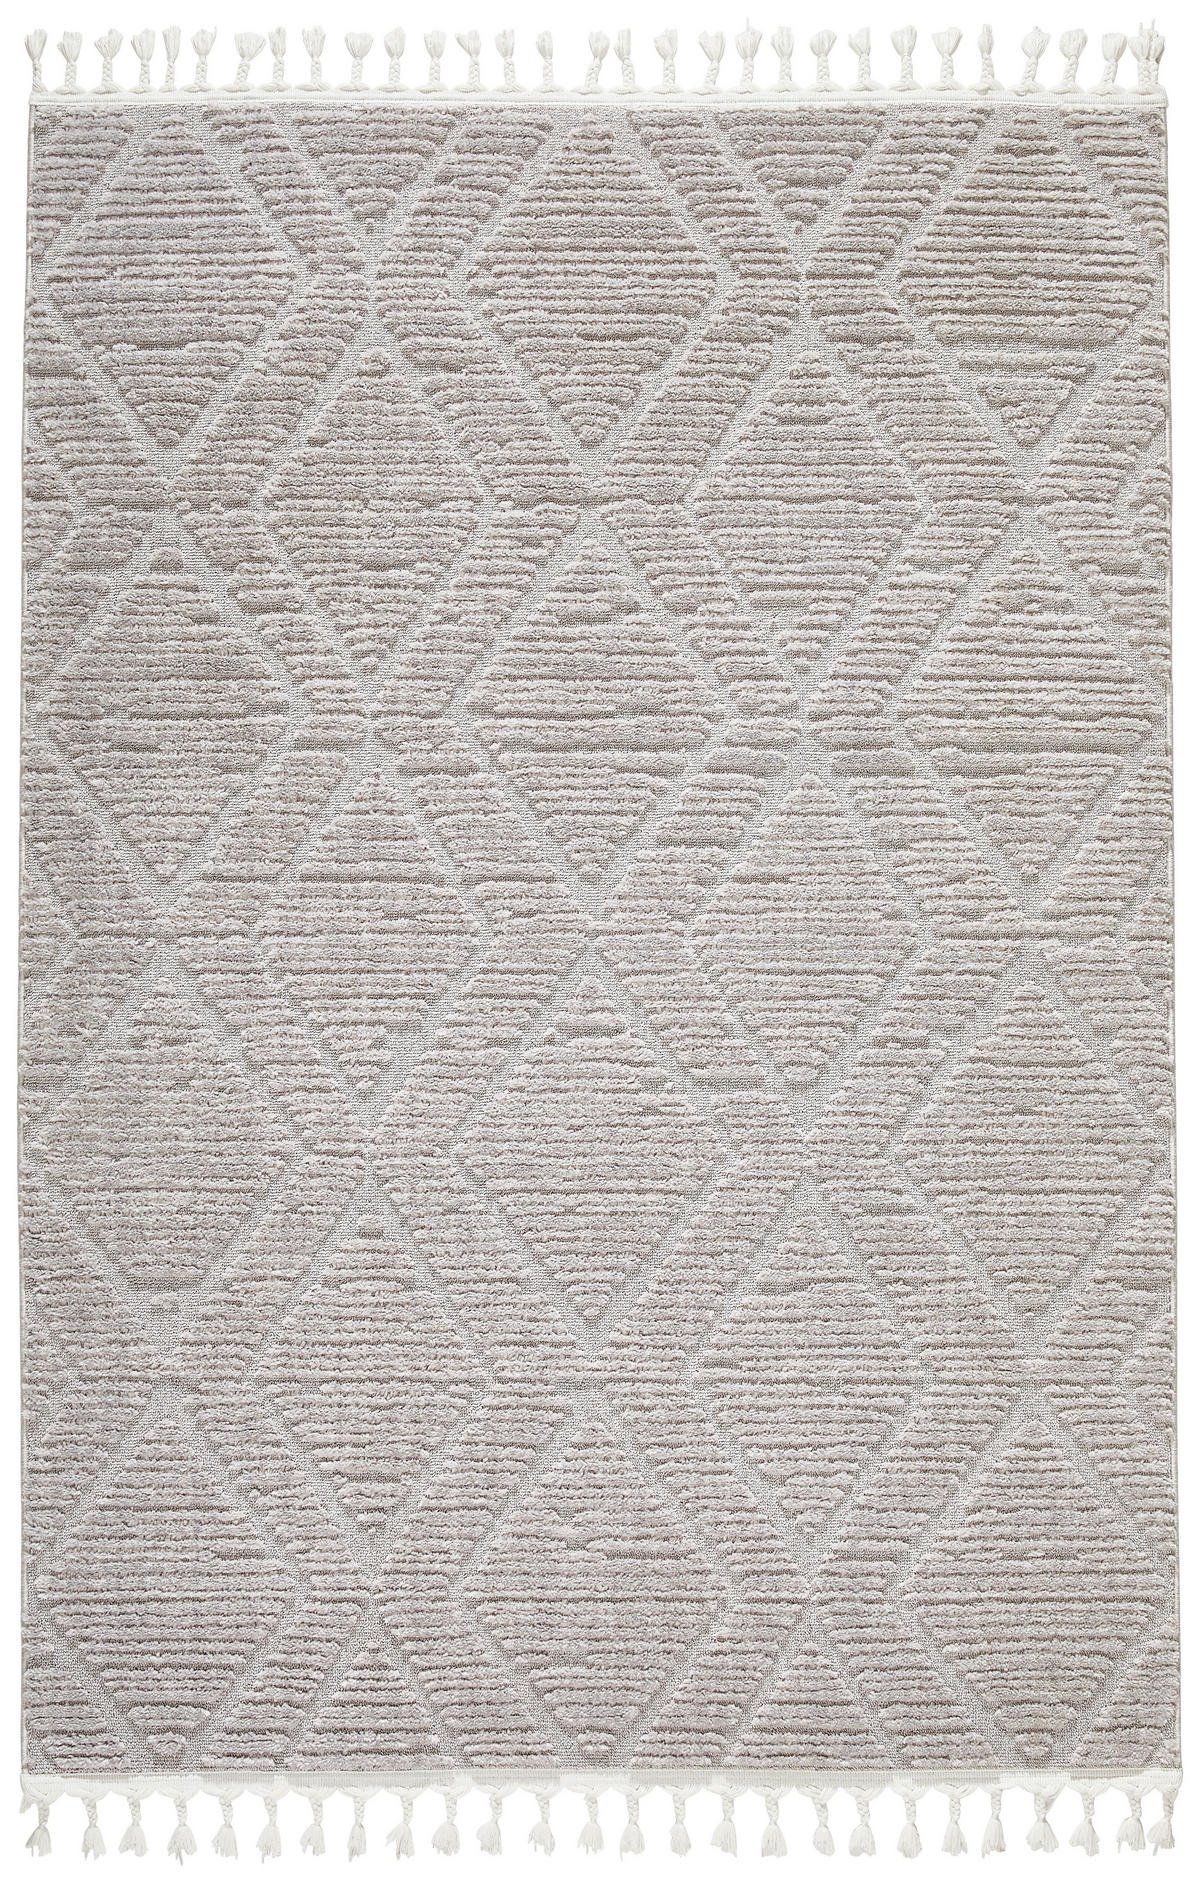 WEBTEPPICH 80/150 cm Skagen  - Grau, KONVENTIONELL, Textil (80/150cm) - Novel